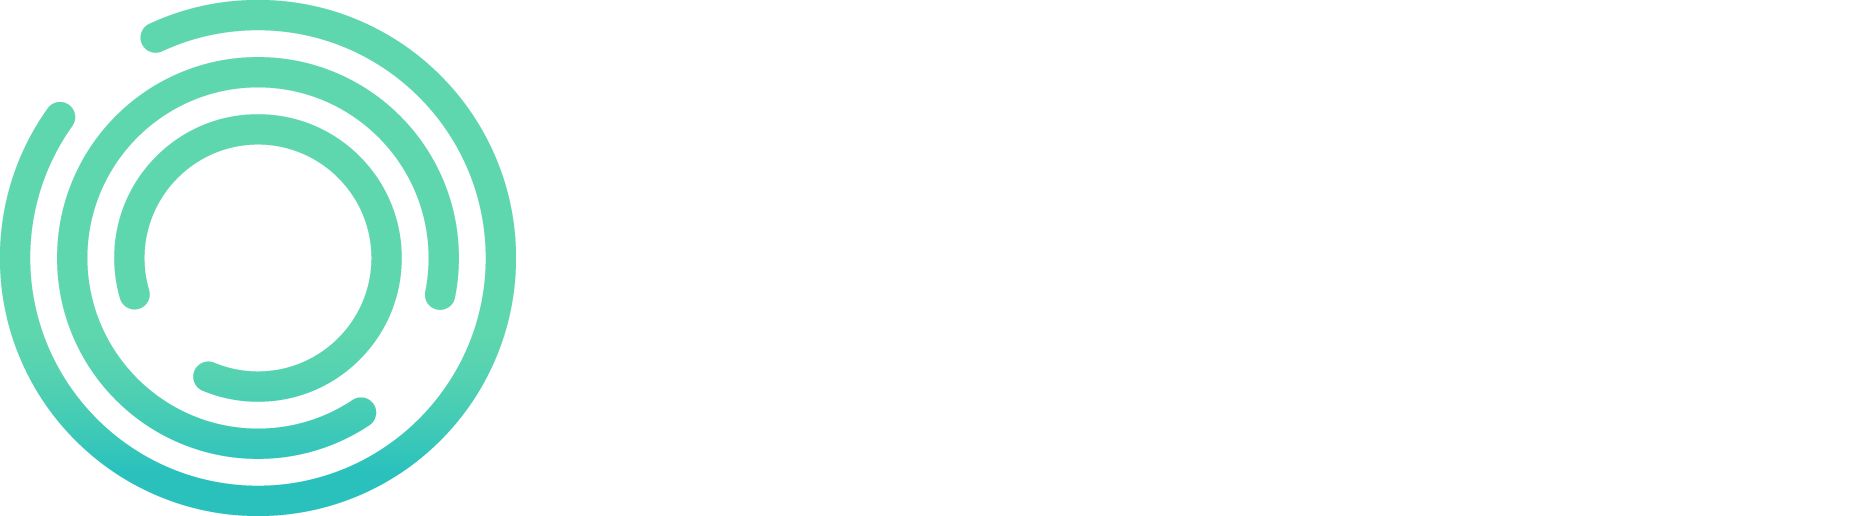 Bitcoin Bonanza - Bitcoin Bonanza について: